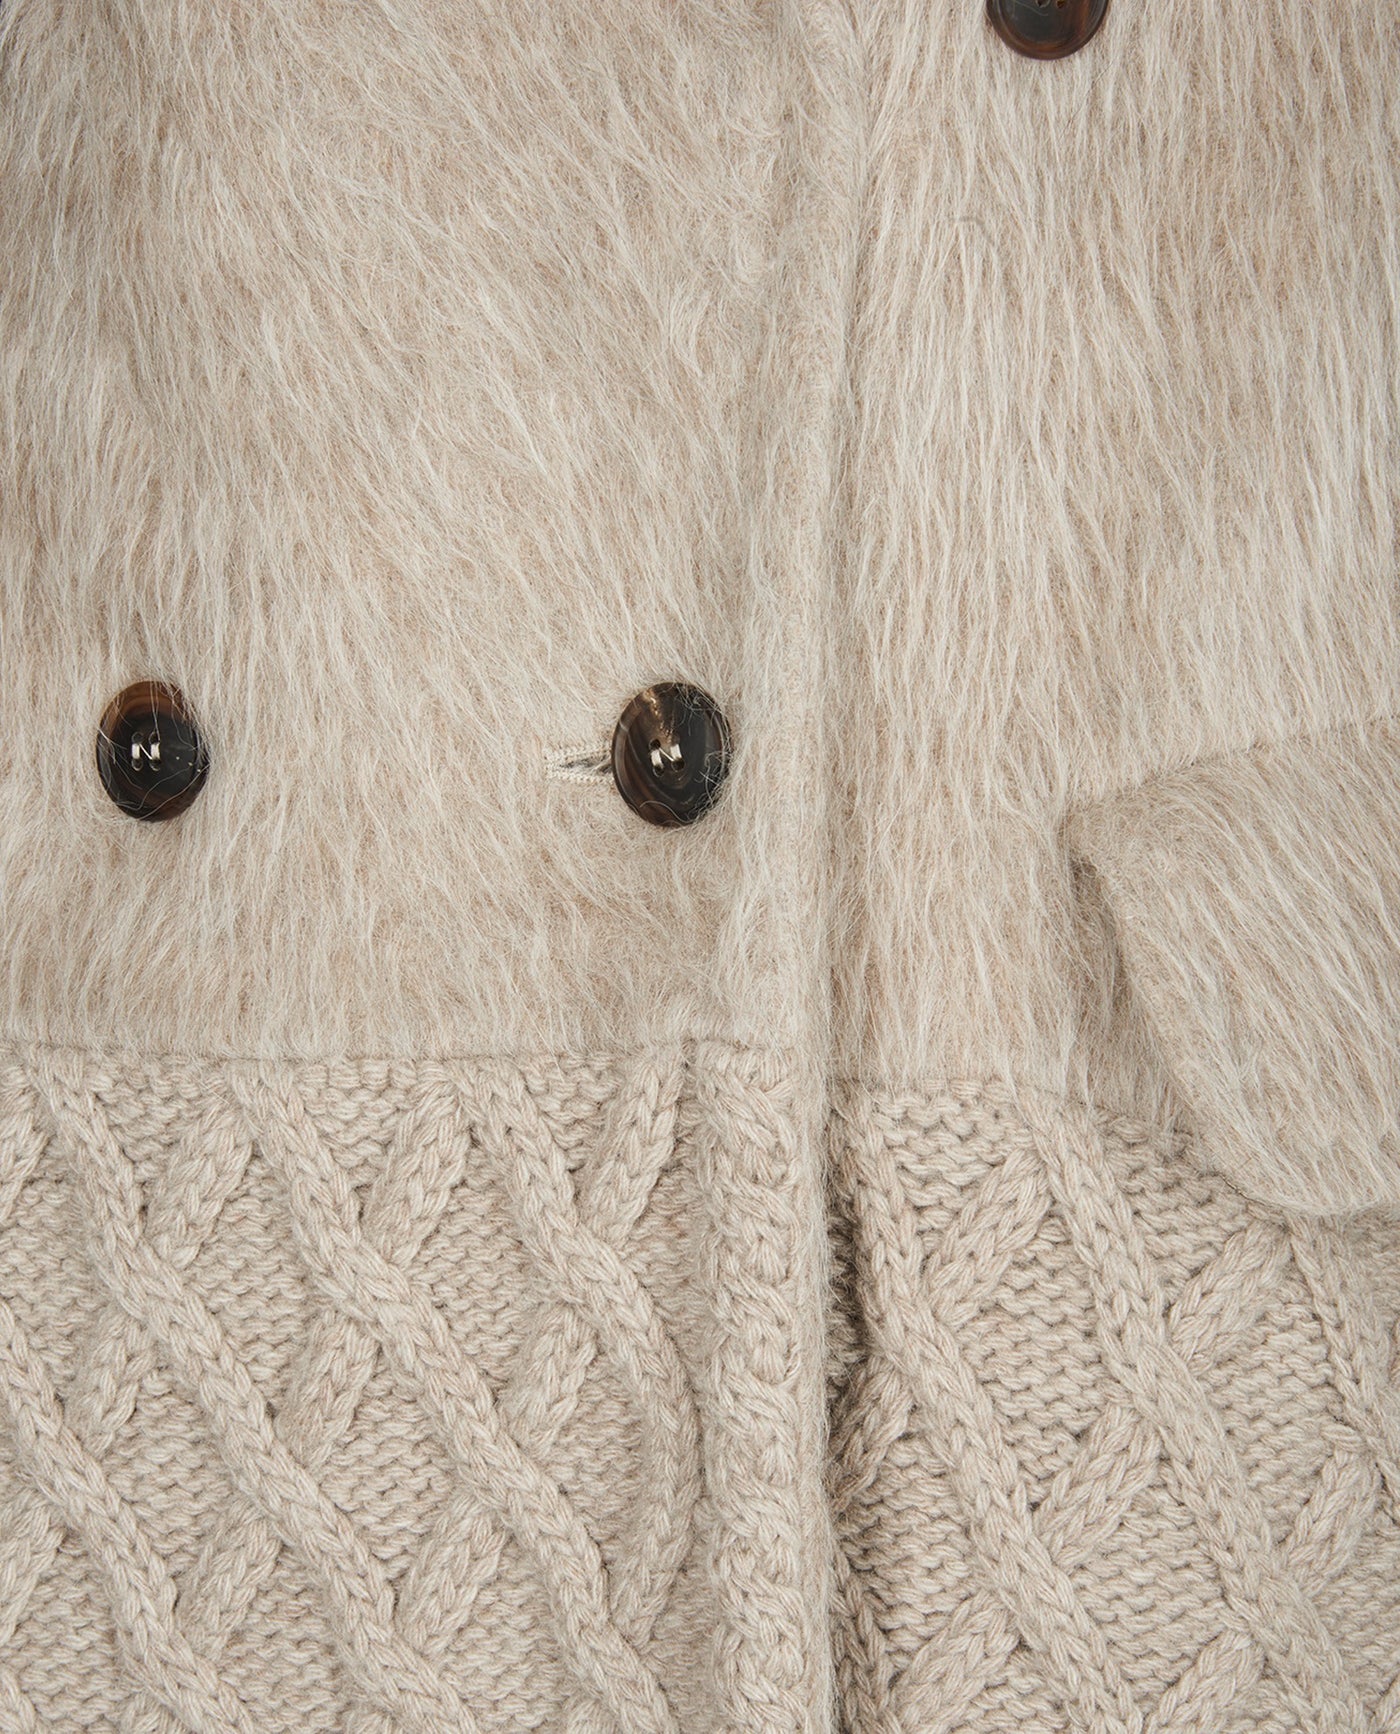 MAX MARA alpaca & wool knitted beige coat size S RRP: £2225